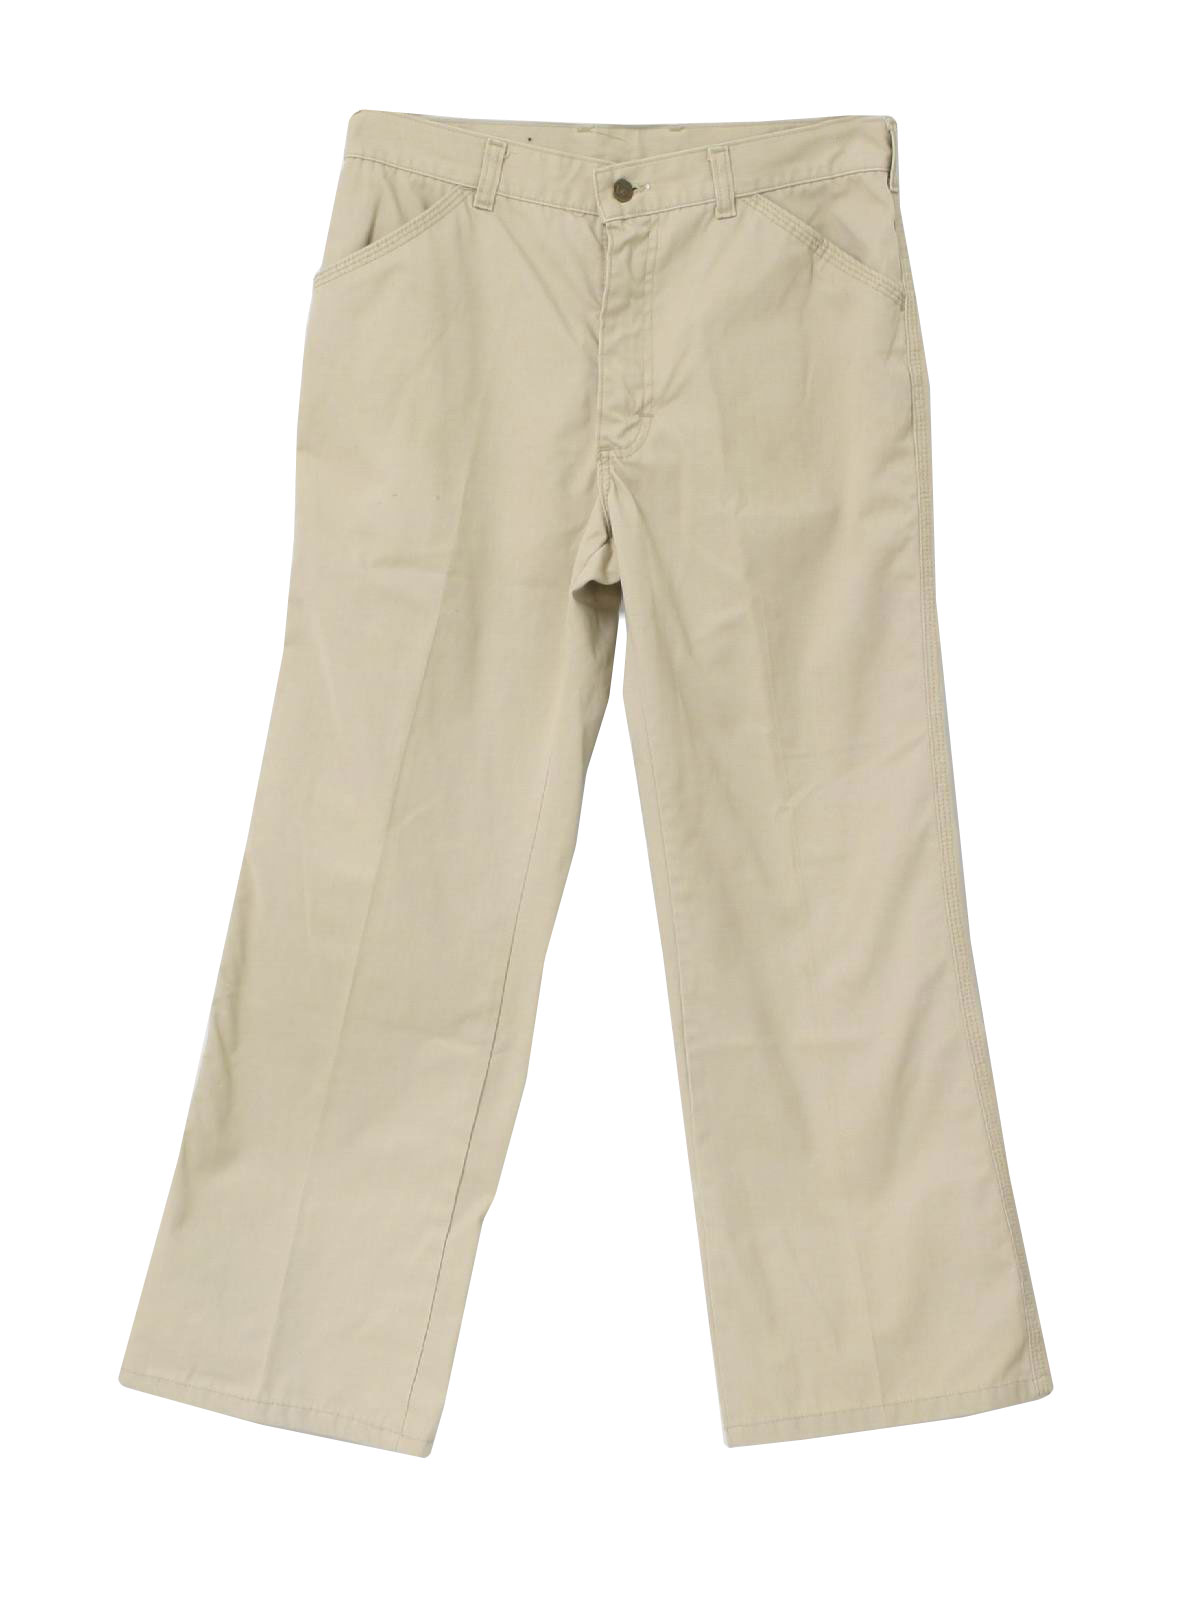 70's Lee Flared Pants / Flares: 70s -Lee- Mens beige cotton poplin ...